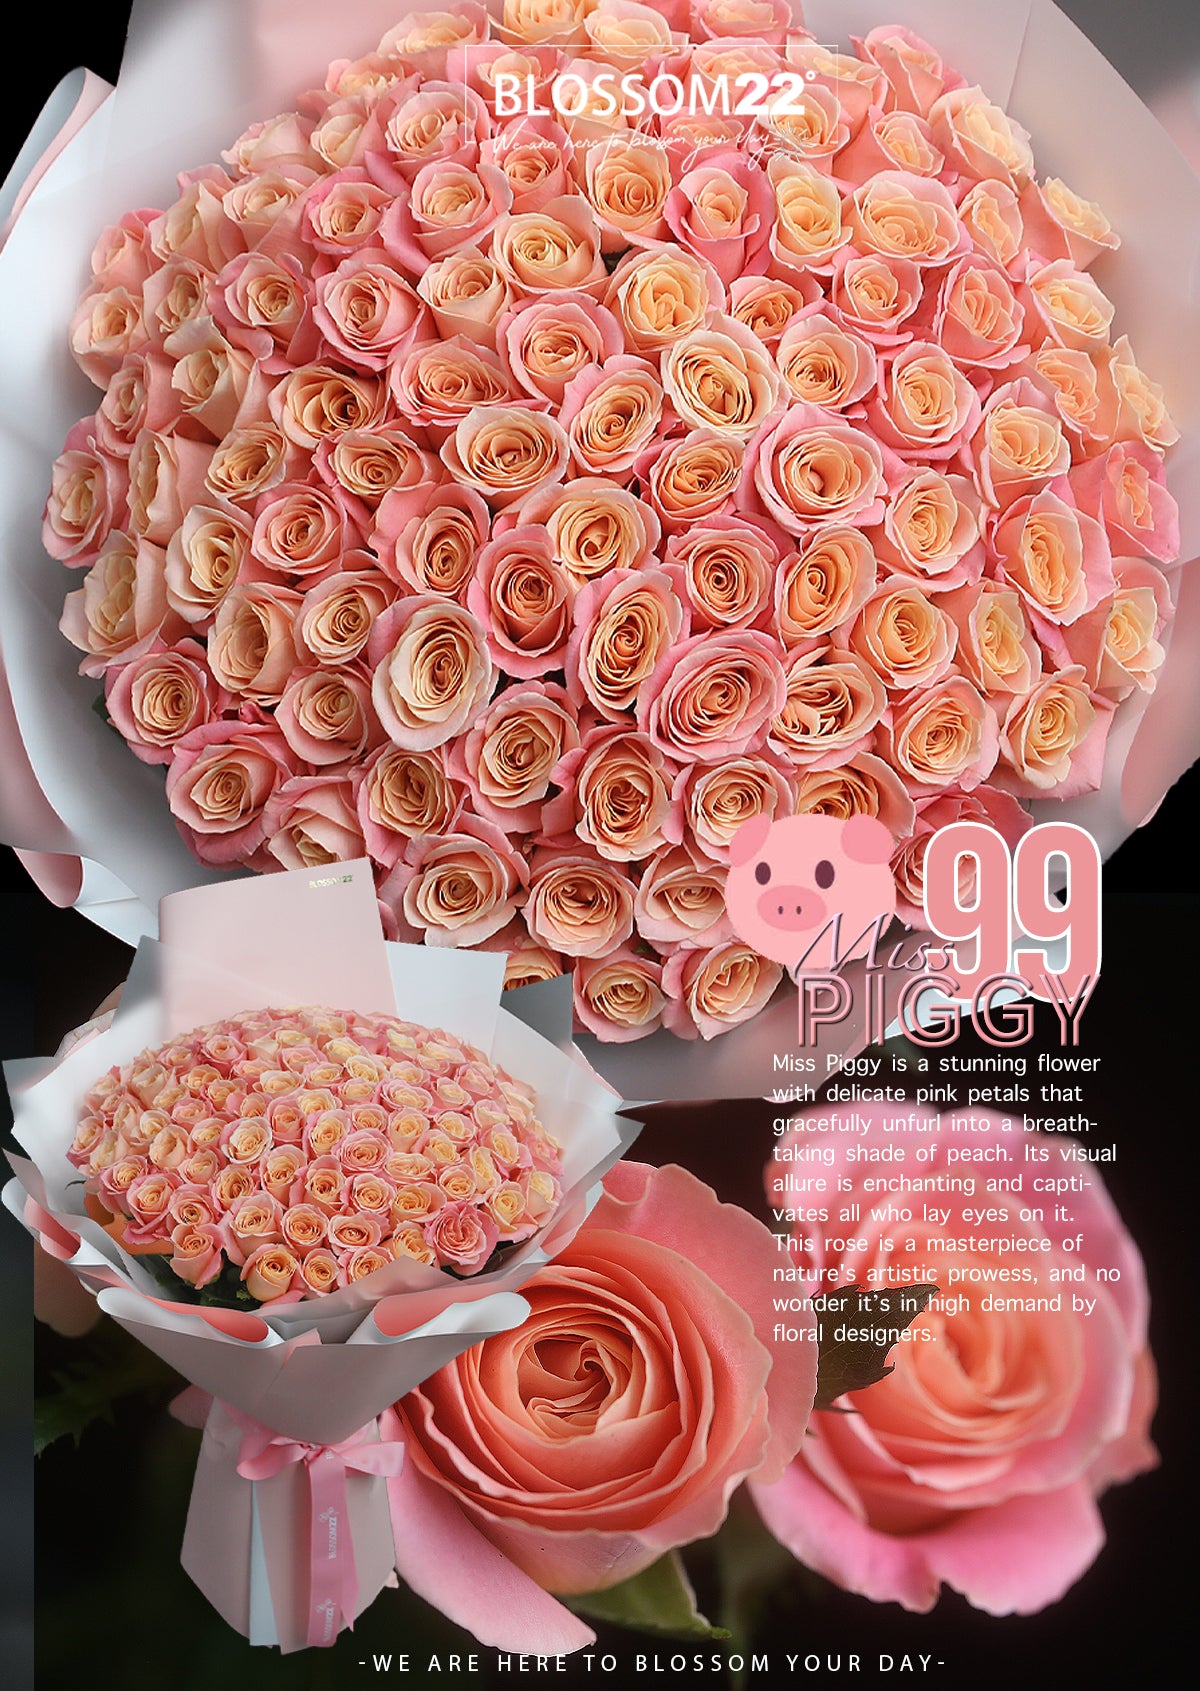 99 piggy rose